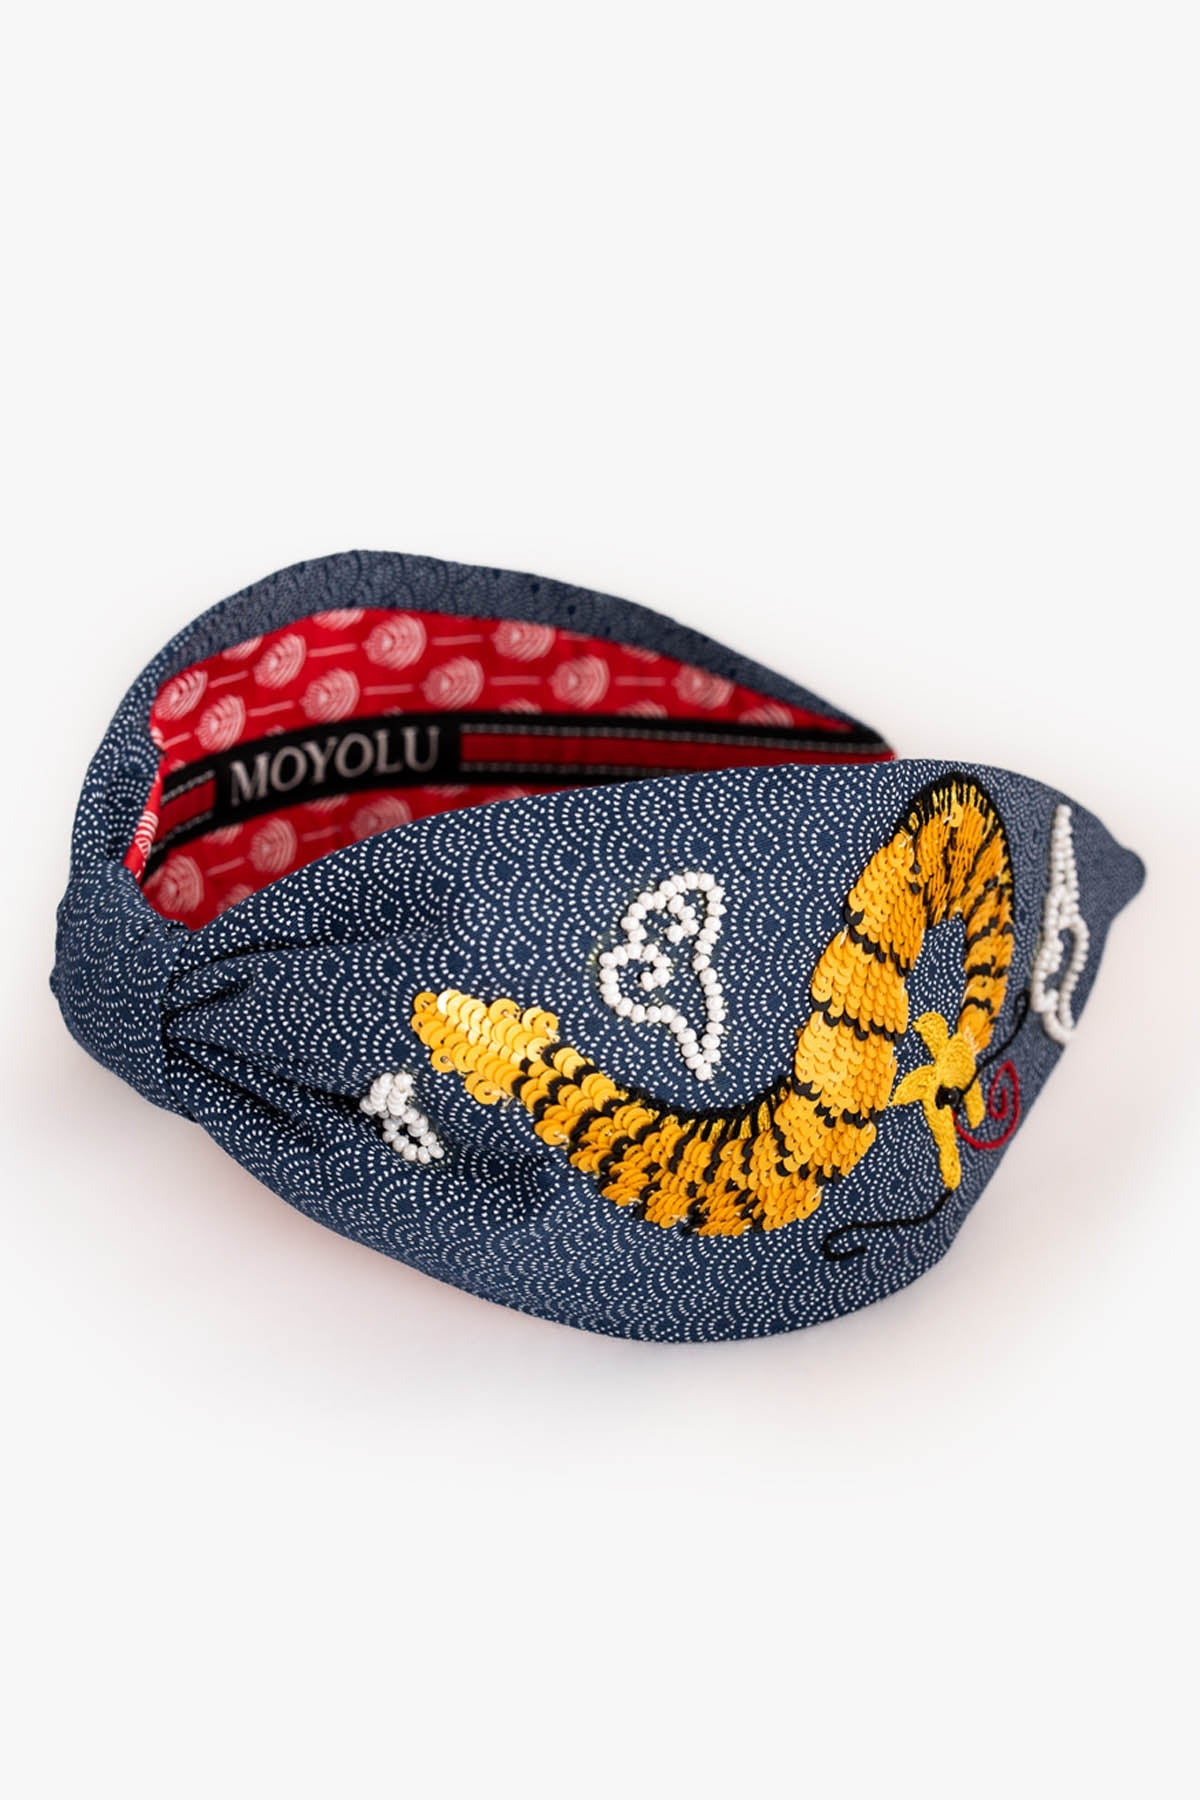 Moyolu Navy Dragon Design Headband Accessories online at ScrollnShops